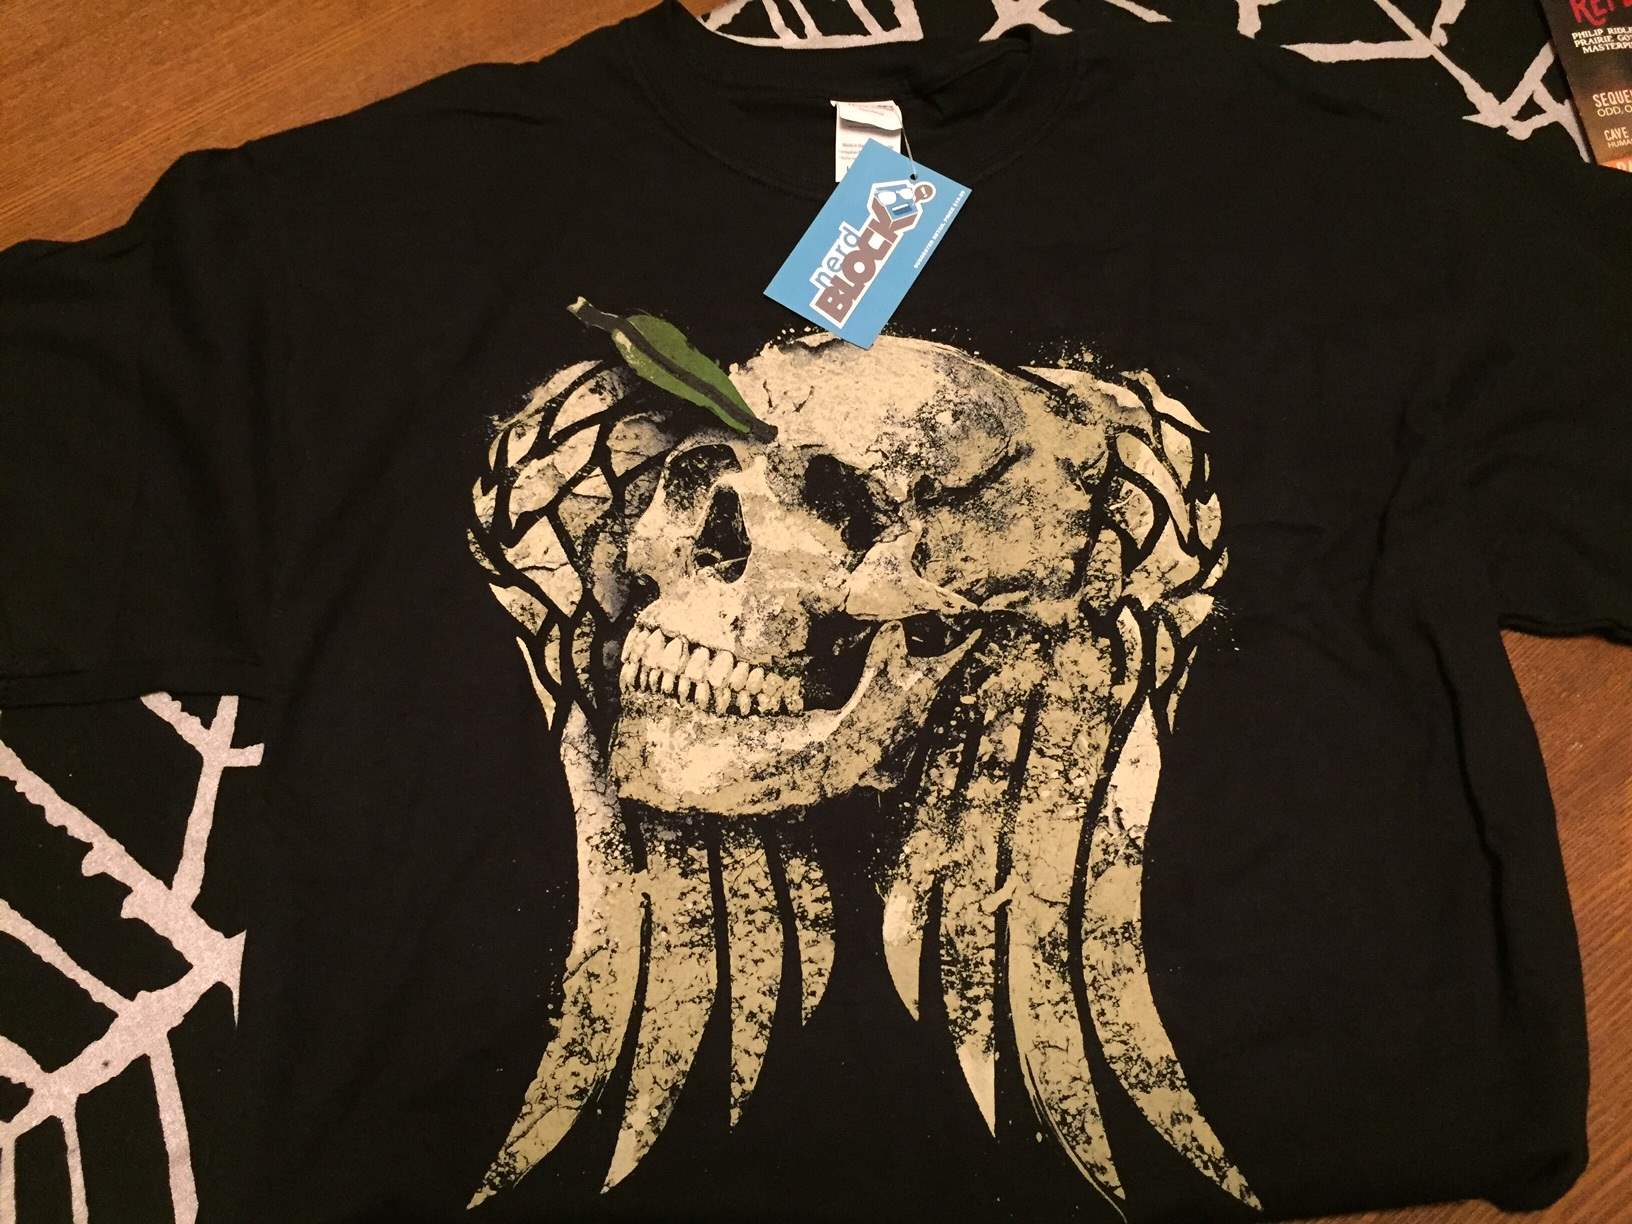 Daryl Dixon inspired t-shirt in the February 2016's Horror Block